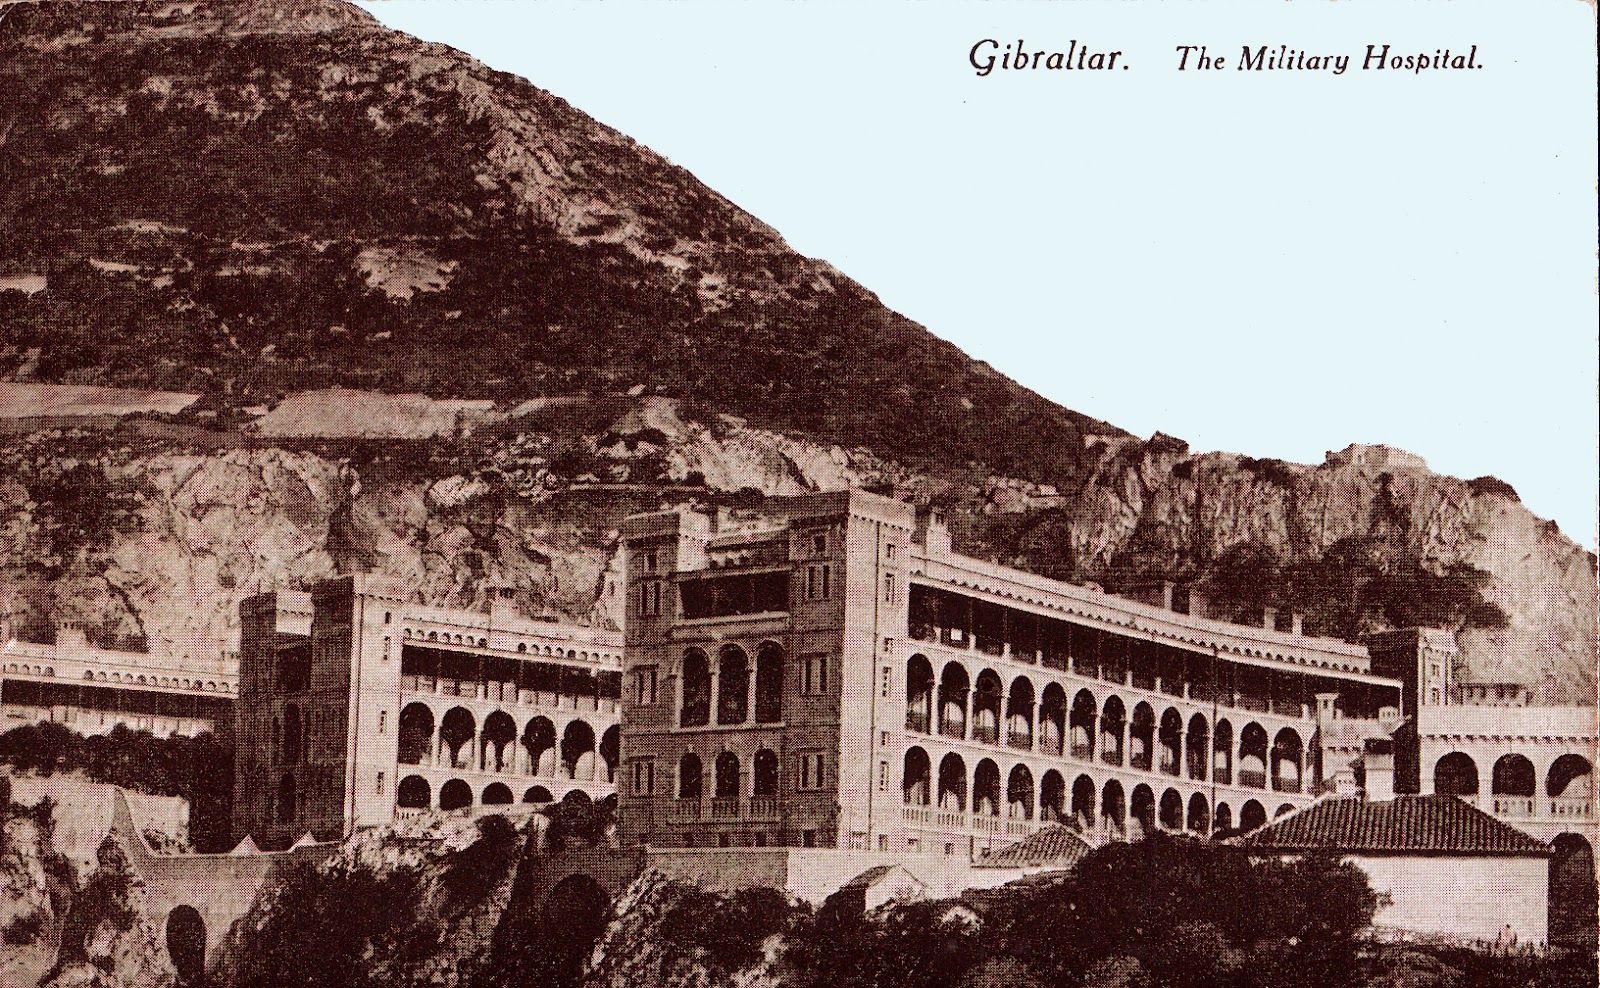 Removals Case Study: Gibraltar’s Royal Naval Hospital